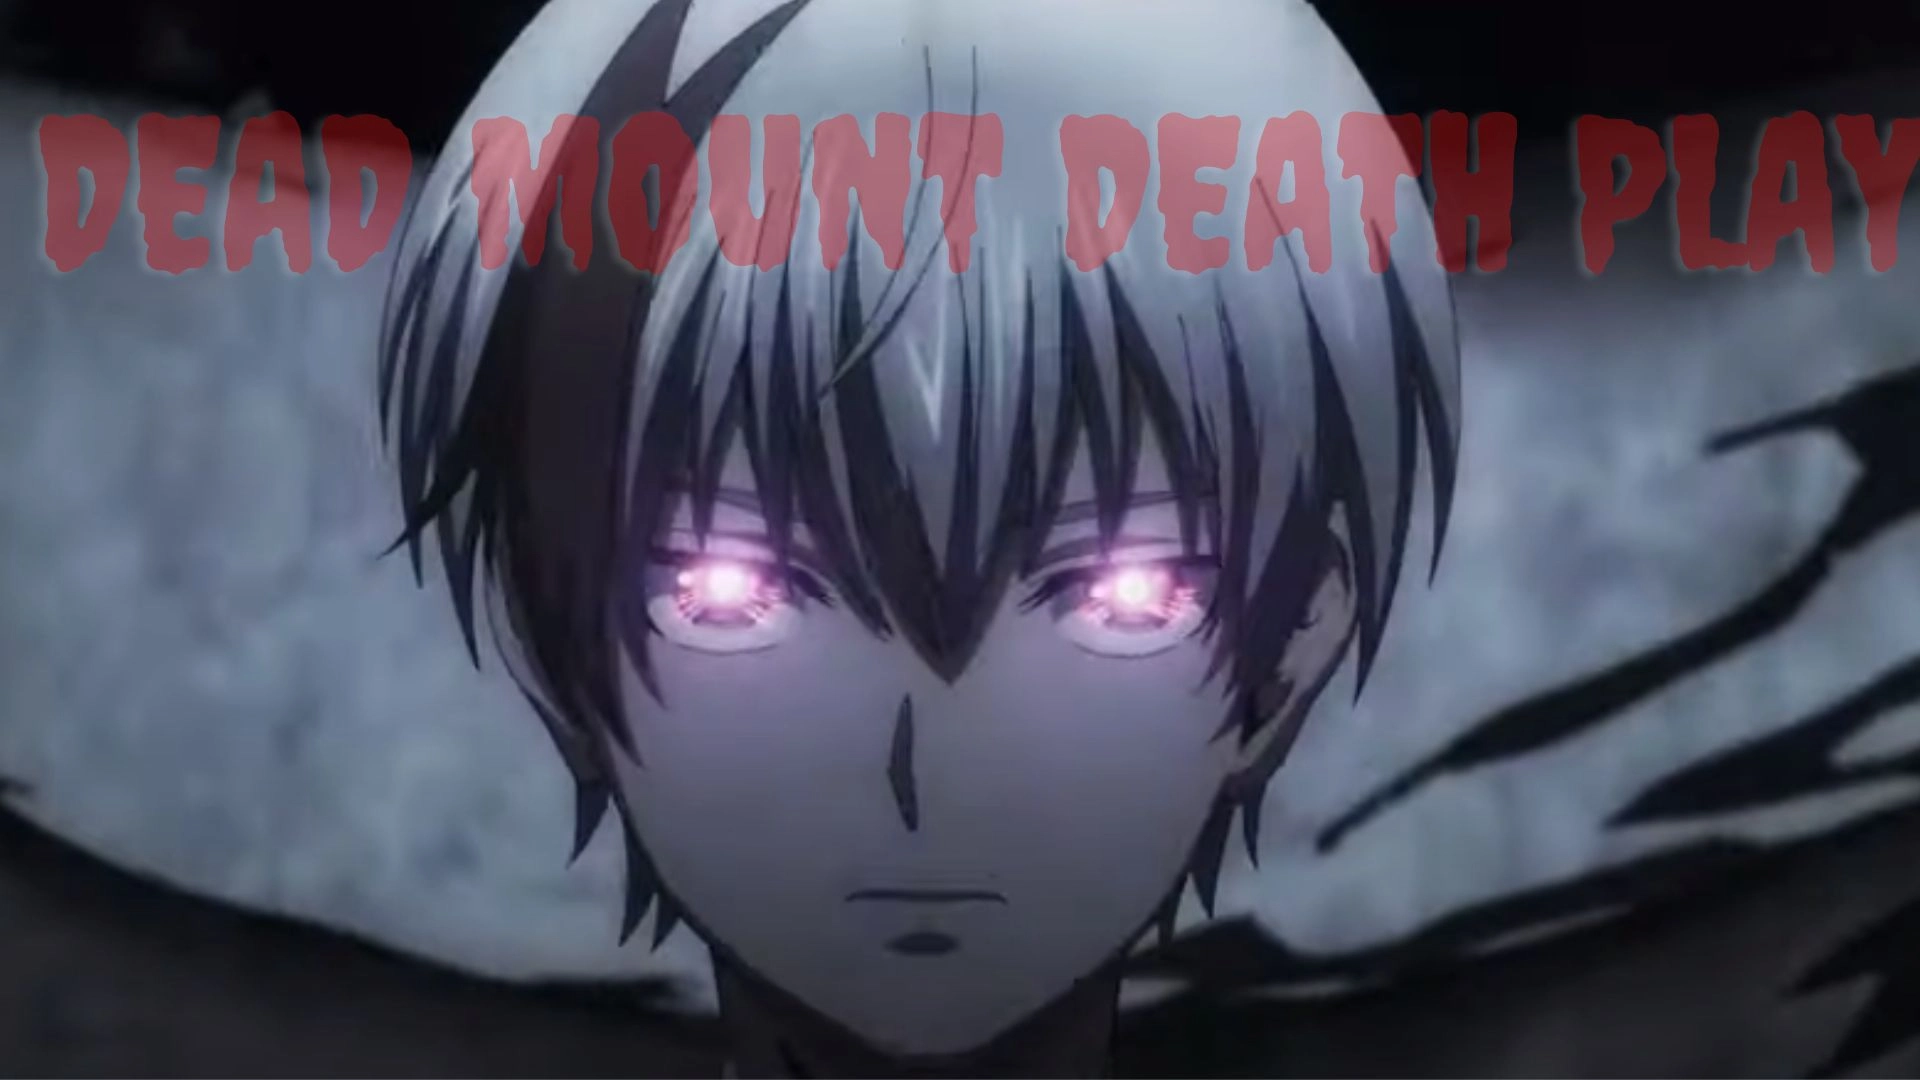 Dead Mount Death Play Season 2 Release Date Finally Announced! 